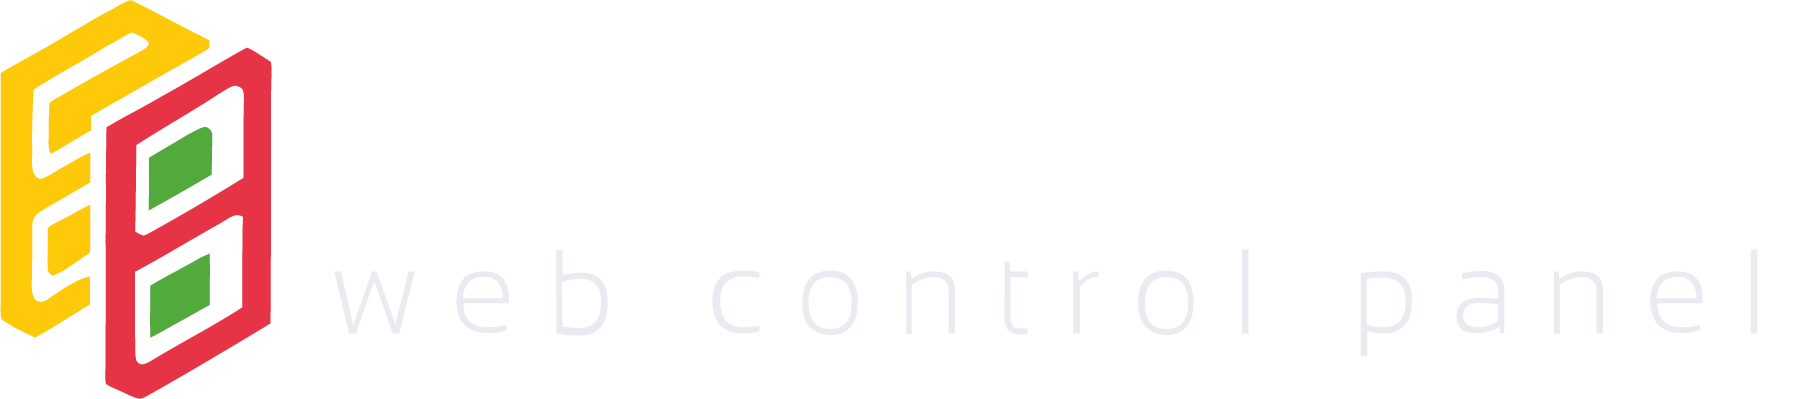 Accesshost LLC